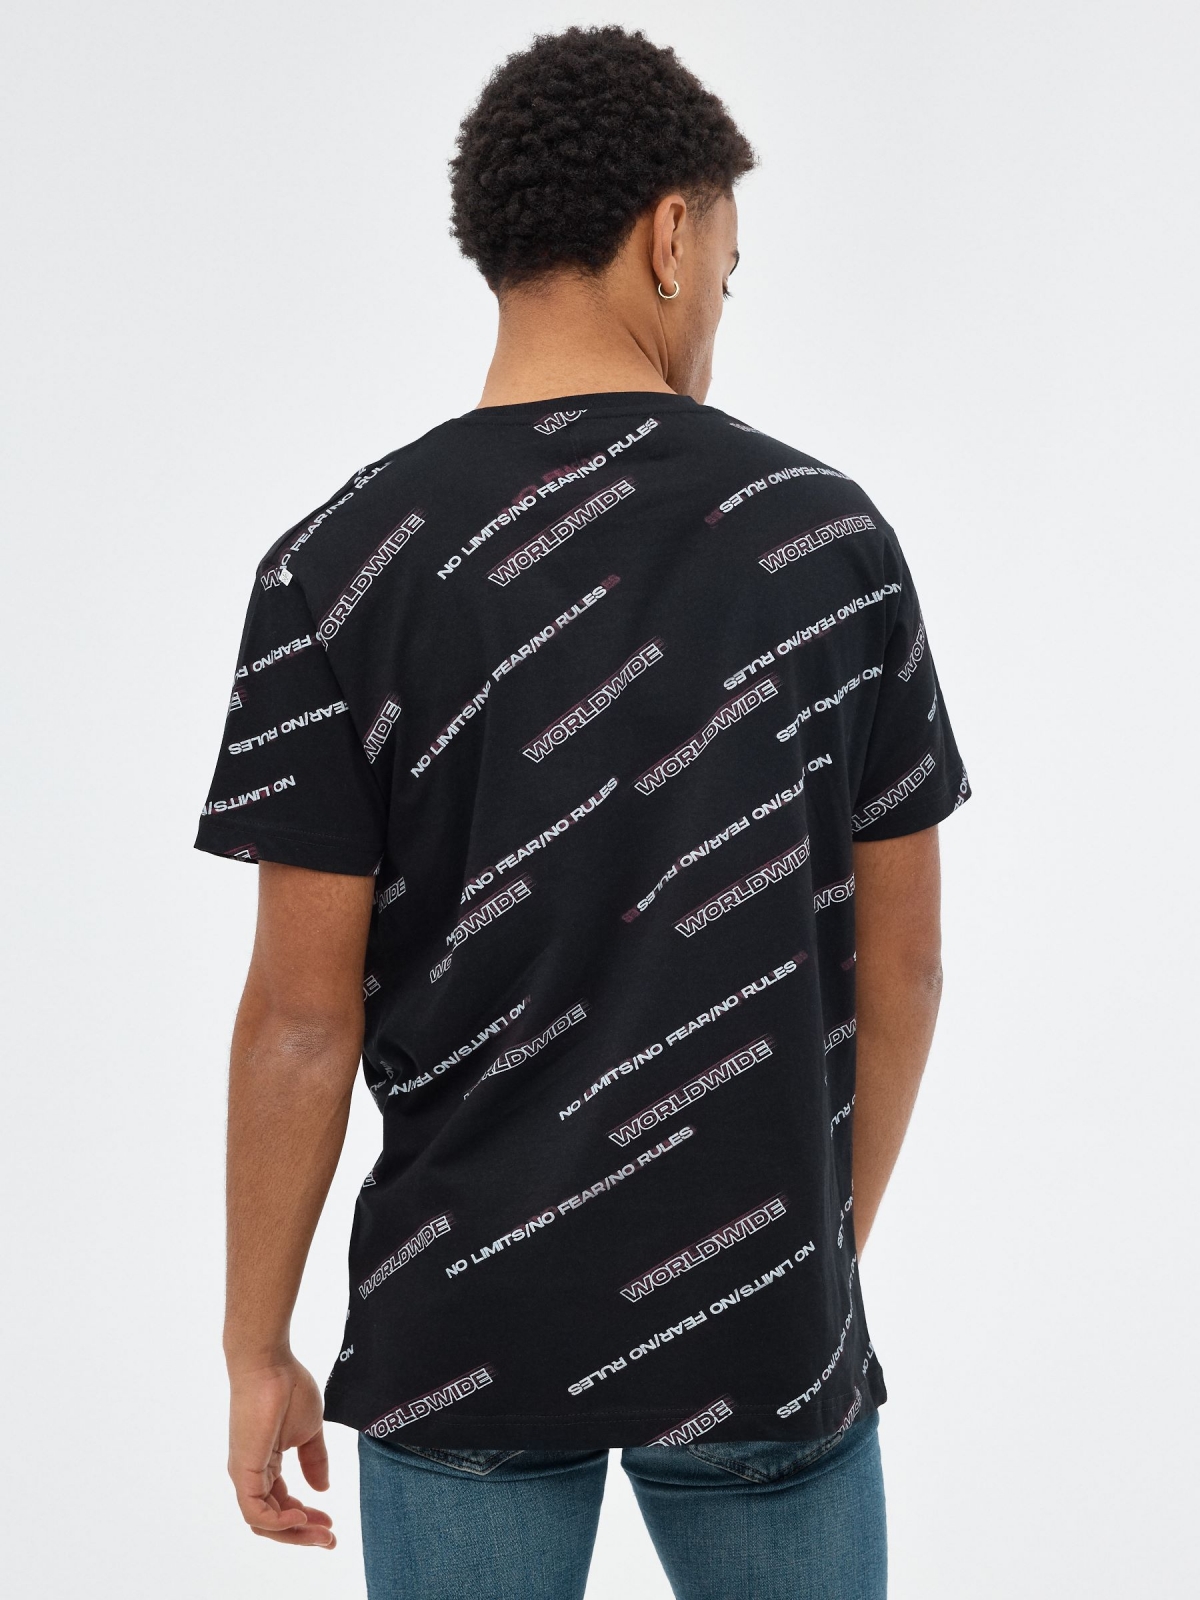 T-shirt mundial preto vista meia traseira